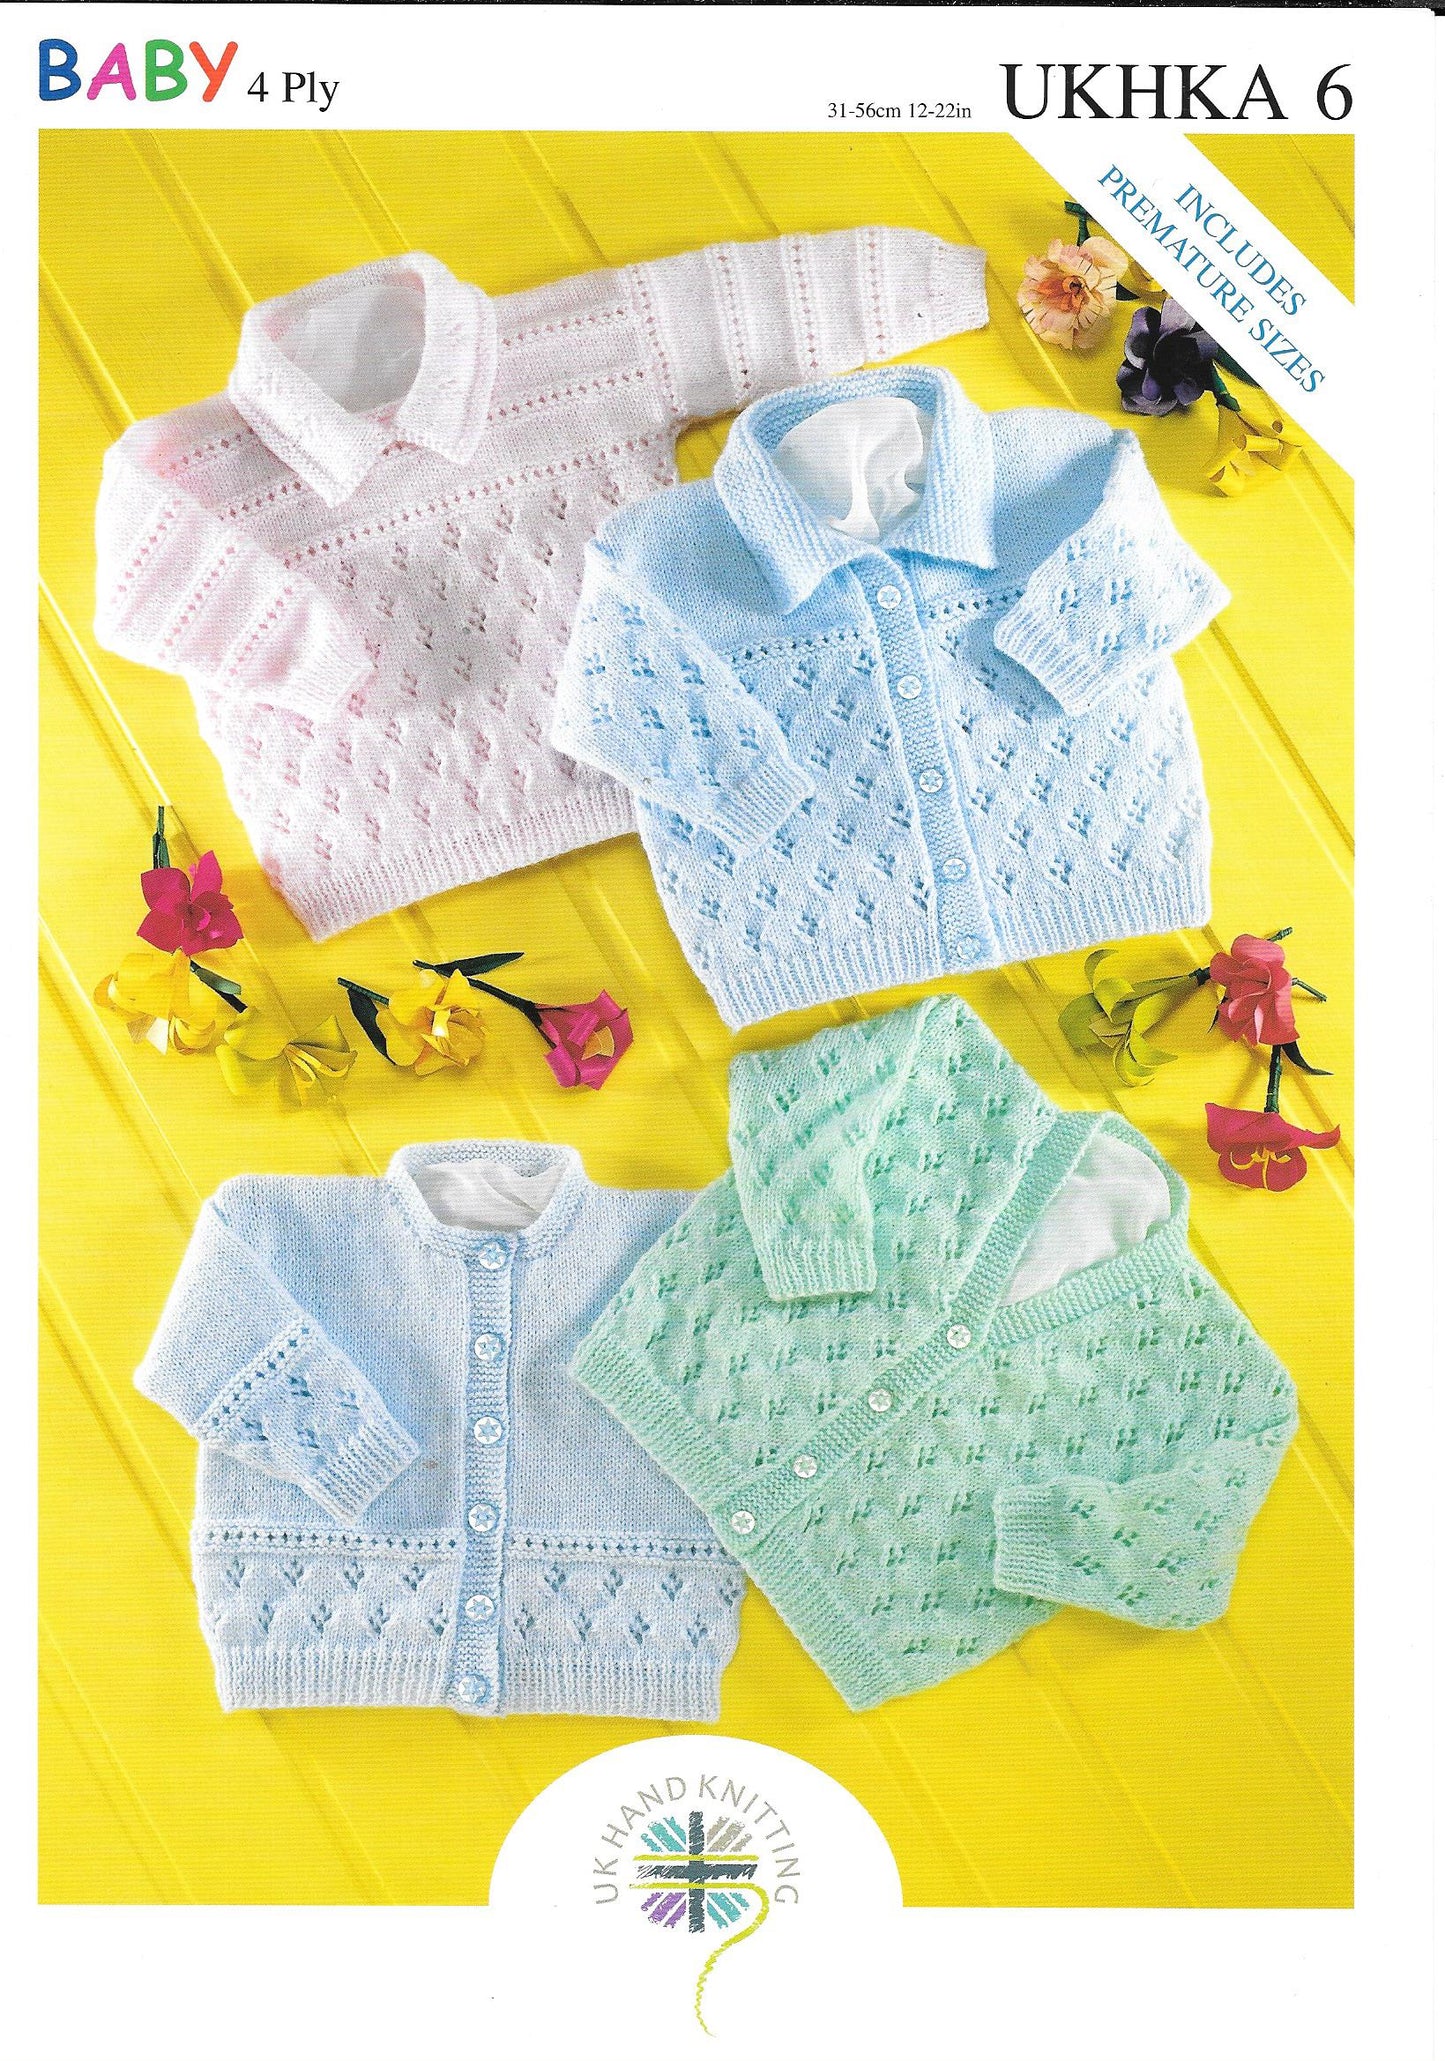 6 UKHKA Baby Cardigans in 4ply knitting pattern